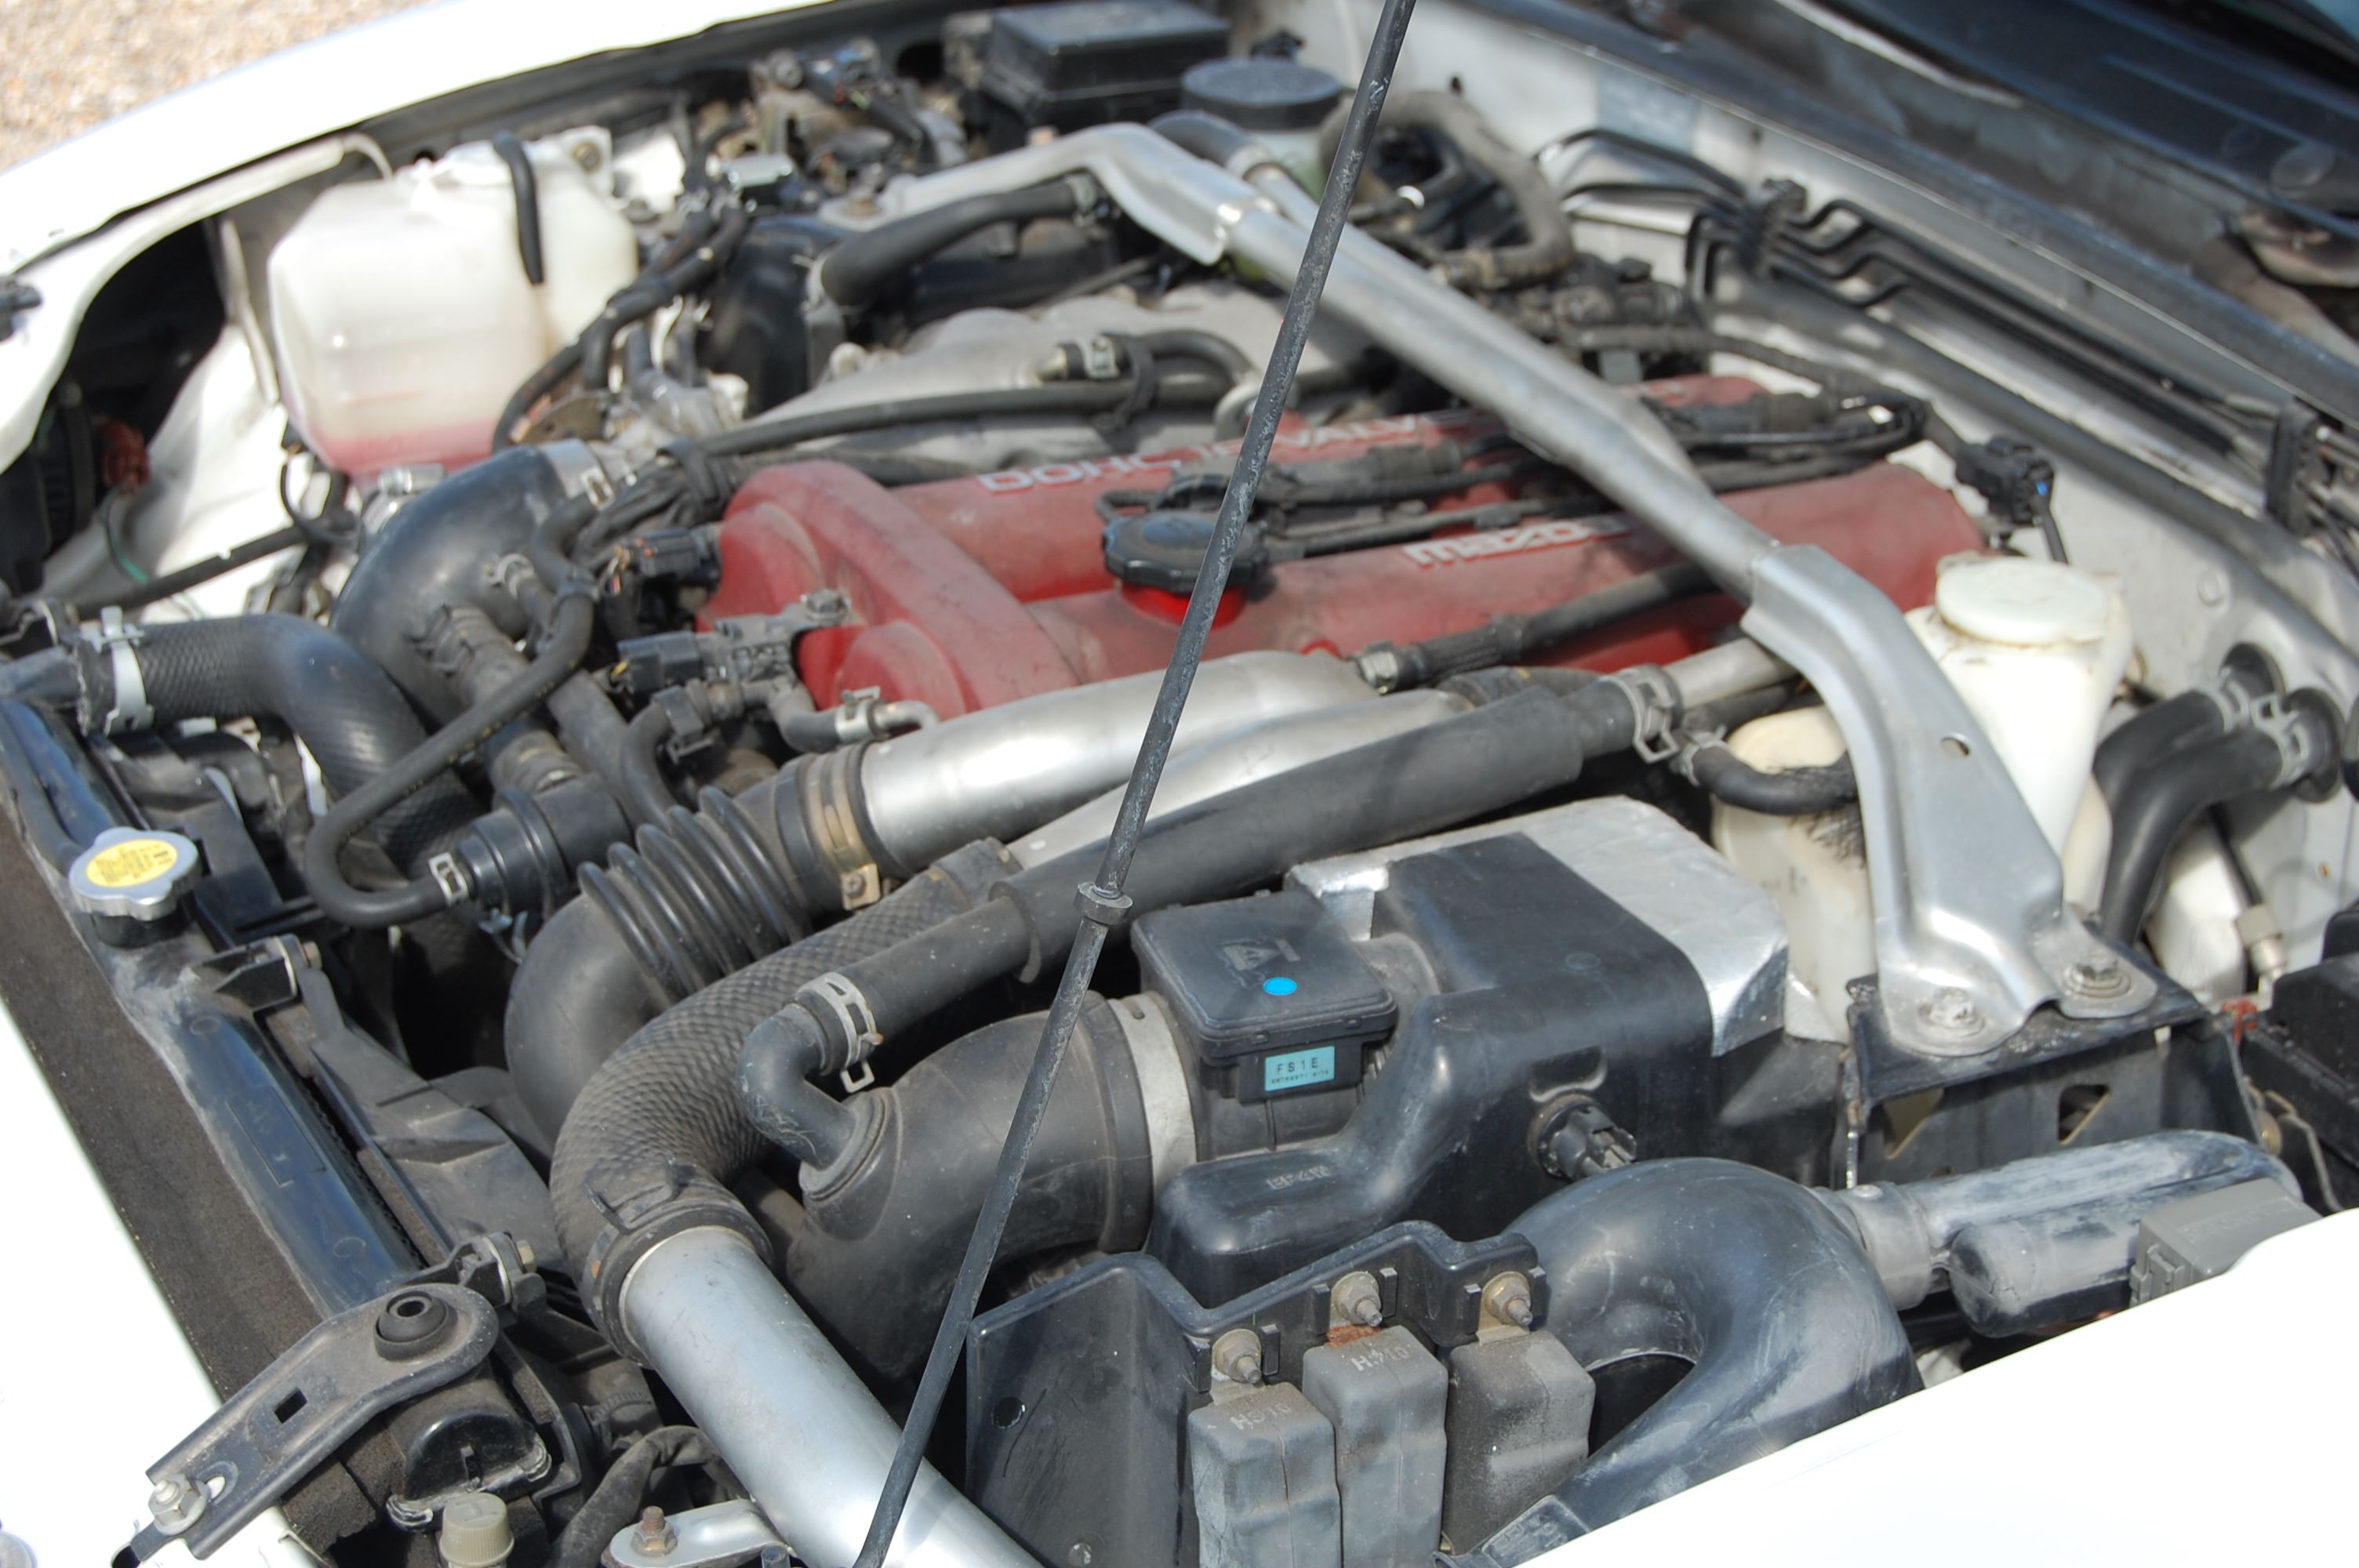 Mazdaspeed mazda mx5 turbo 68gfmjualr oj89ueay0q